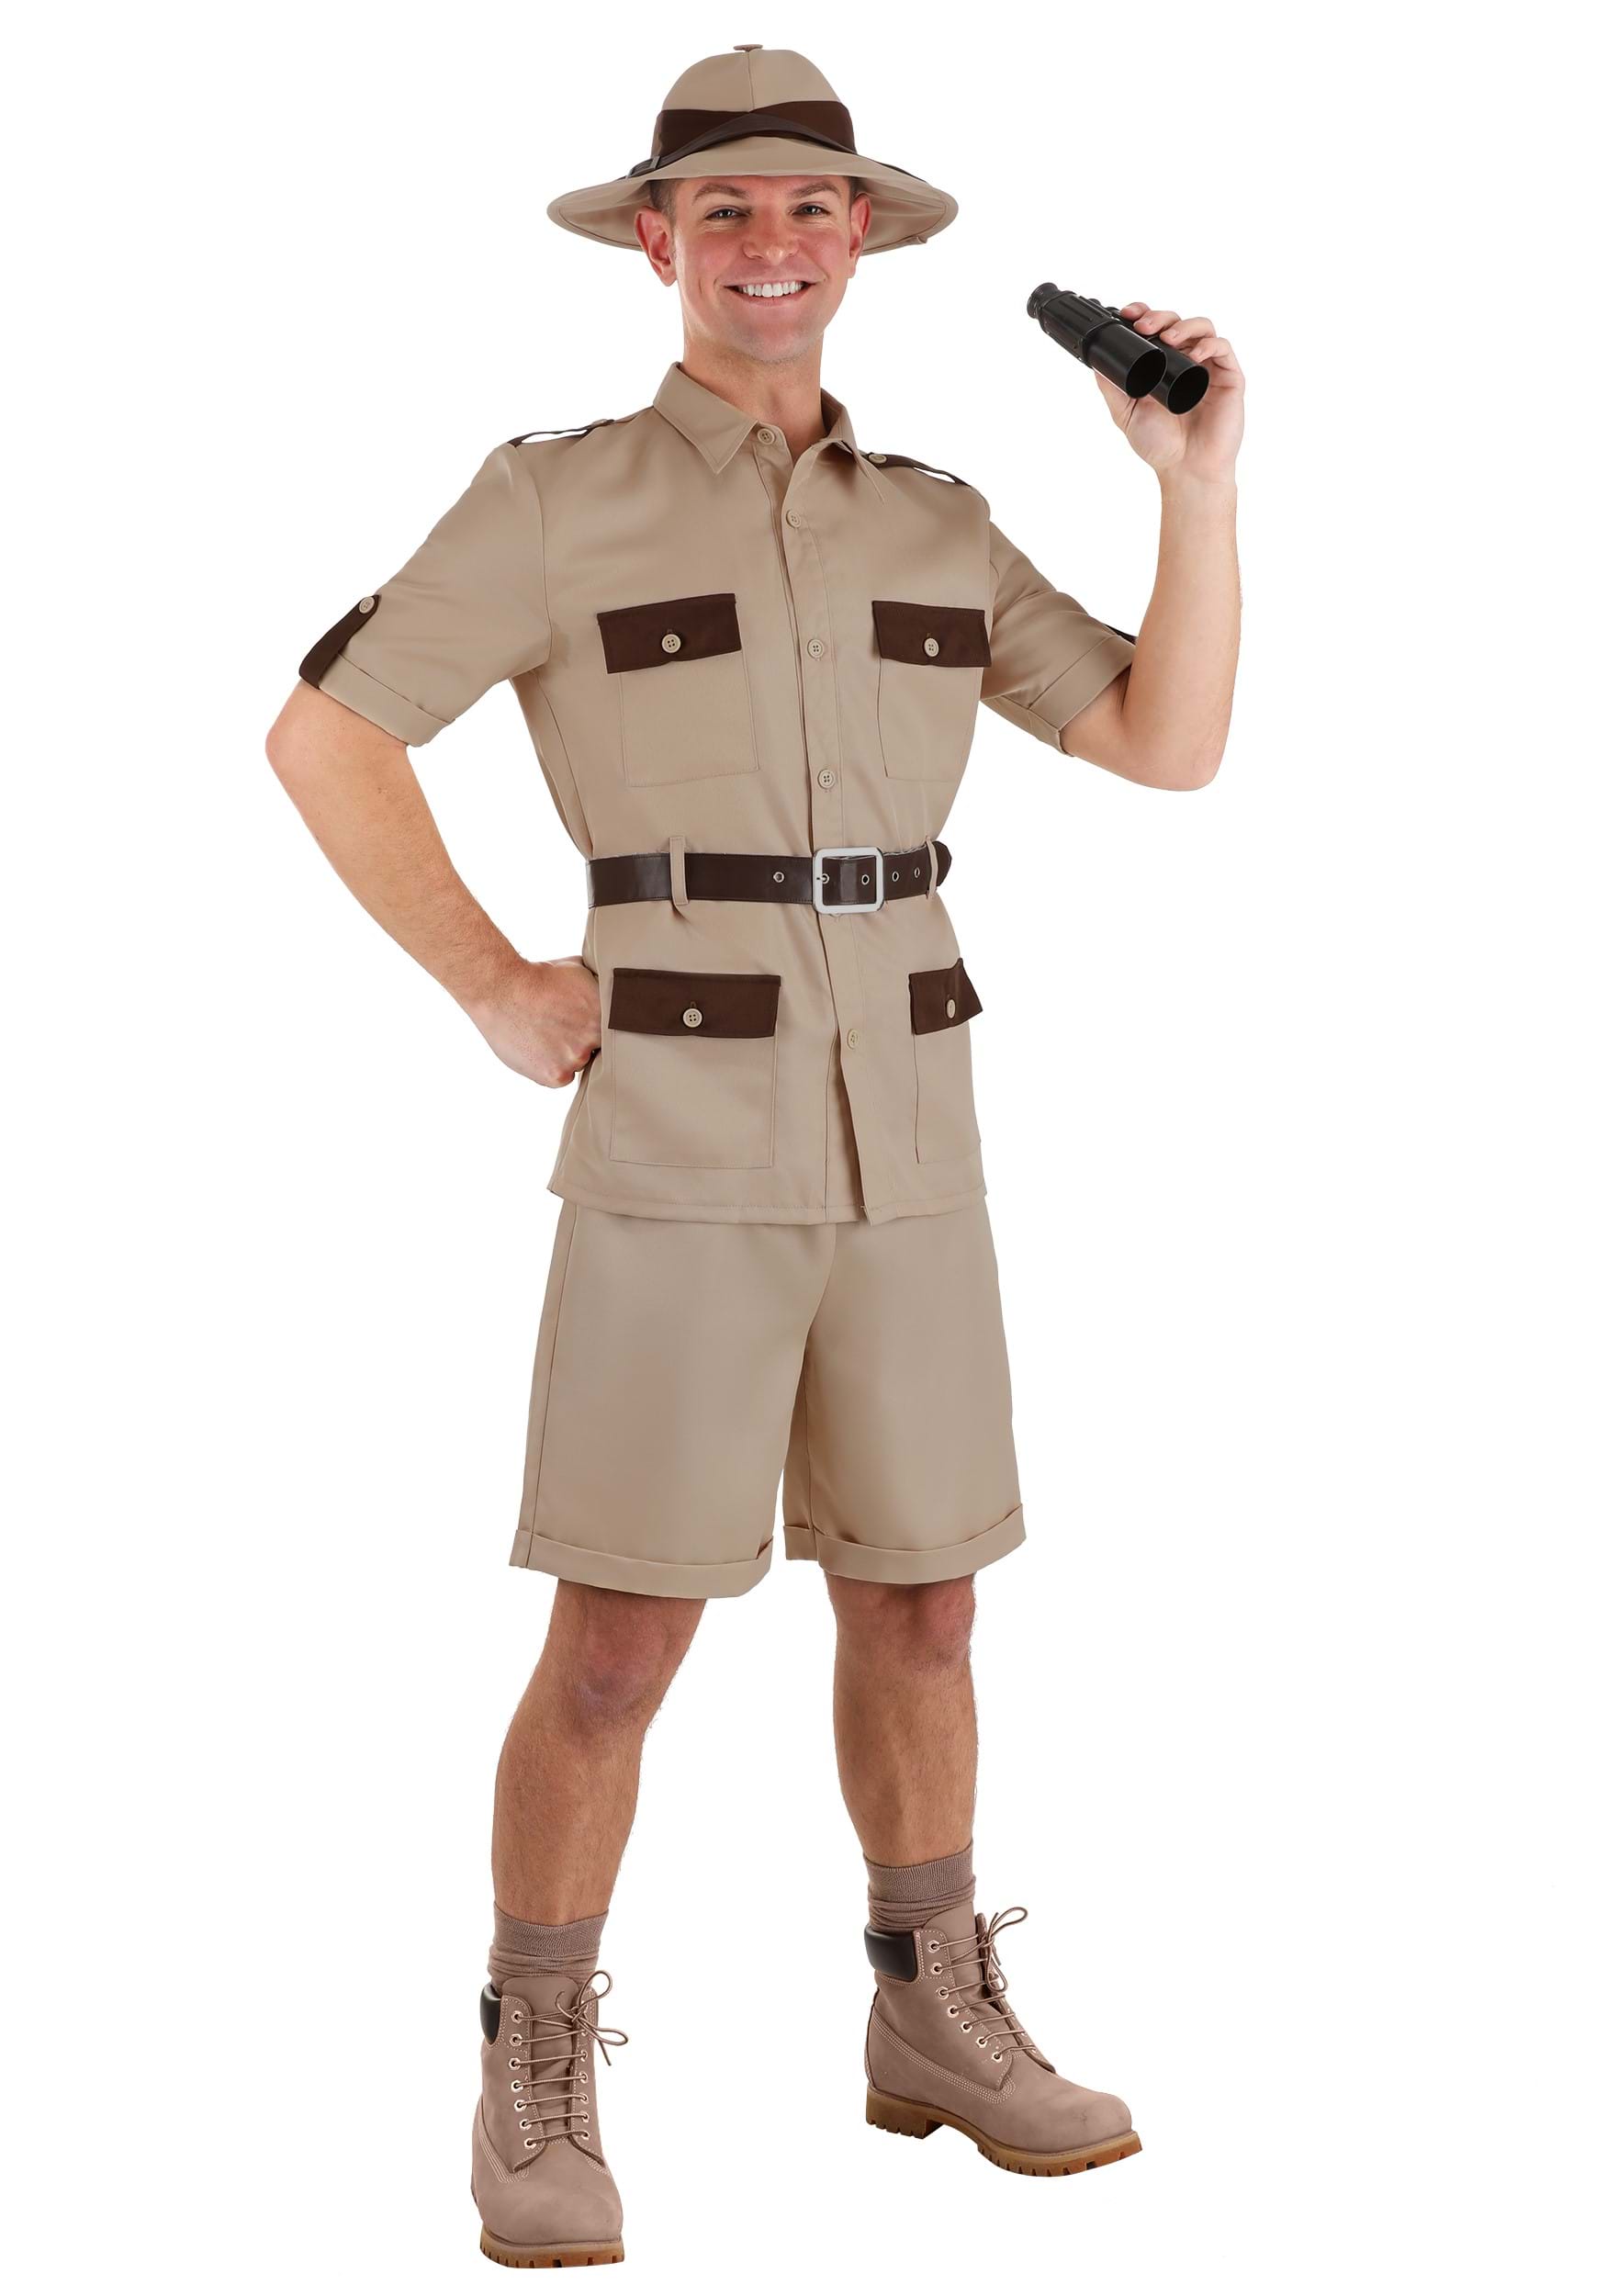 safari theme costume